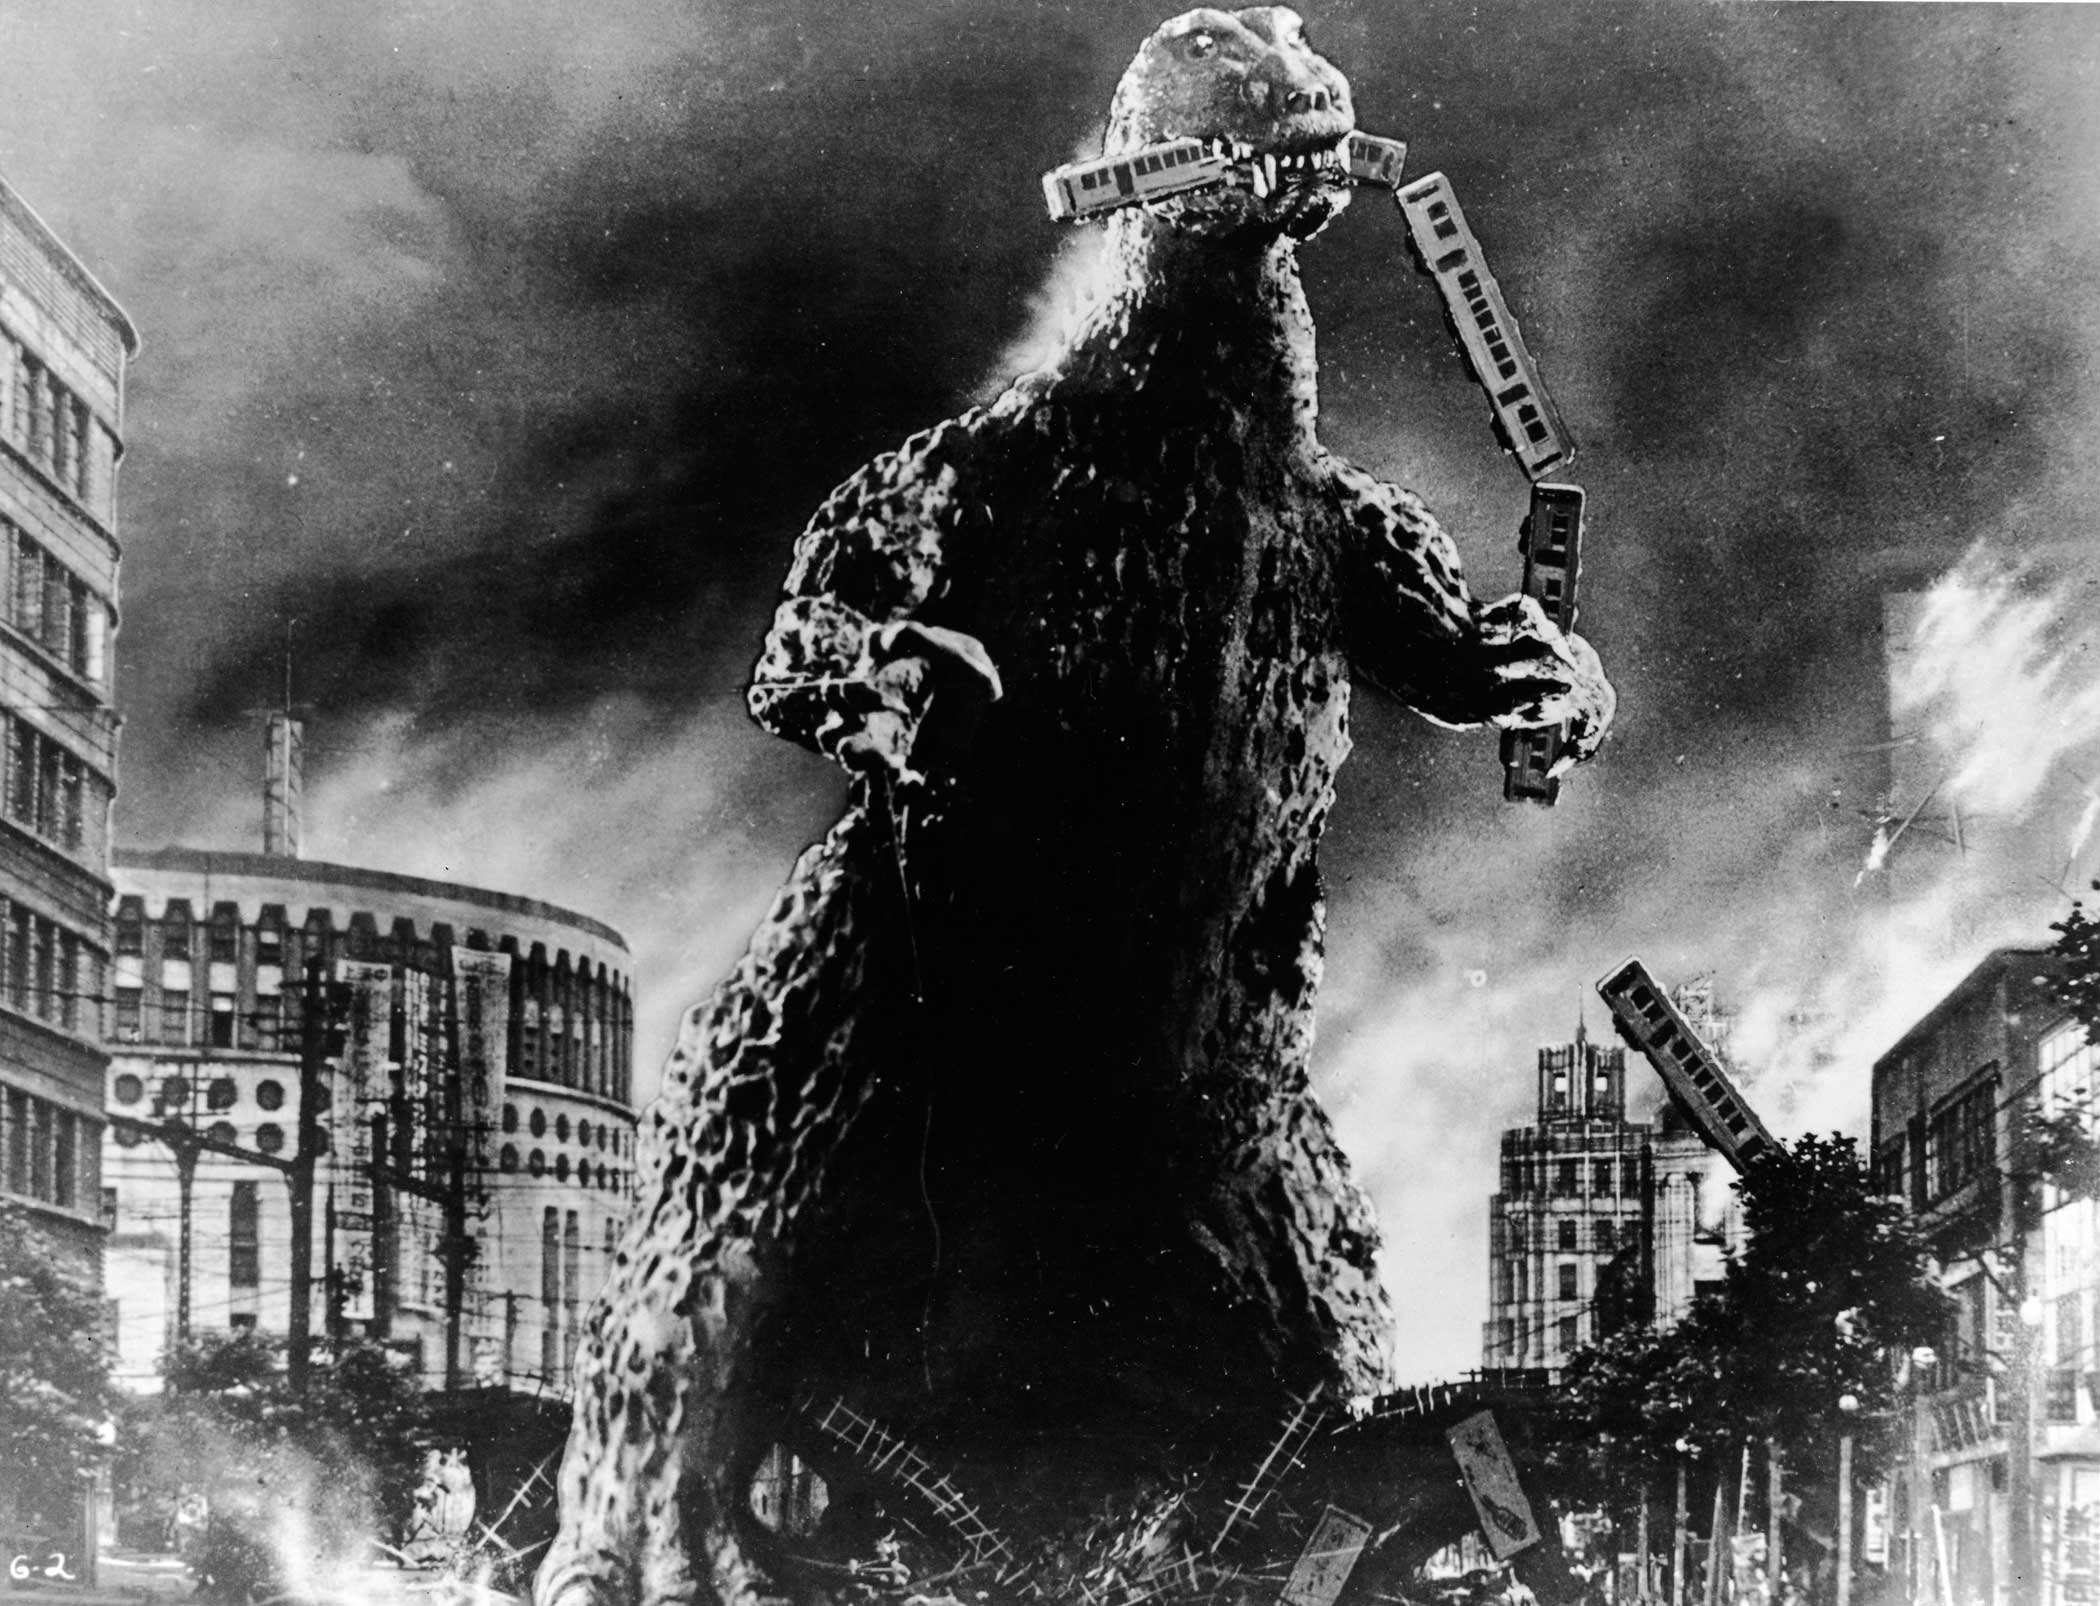 Godzilla from Godzilla, 1954.